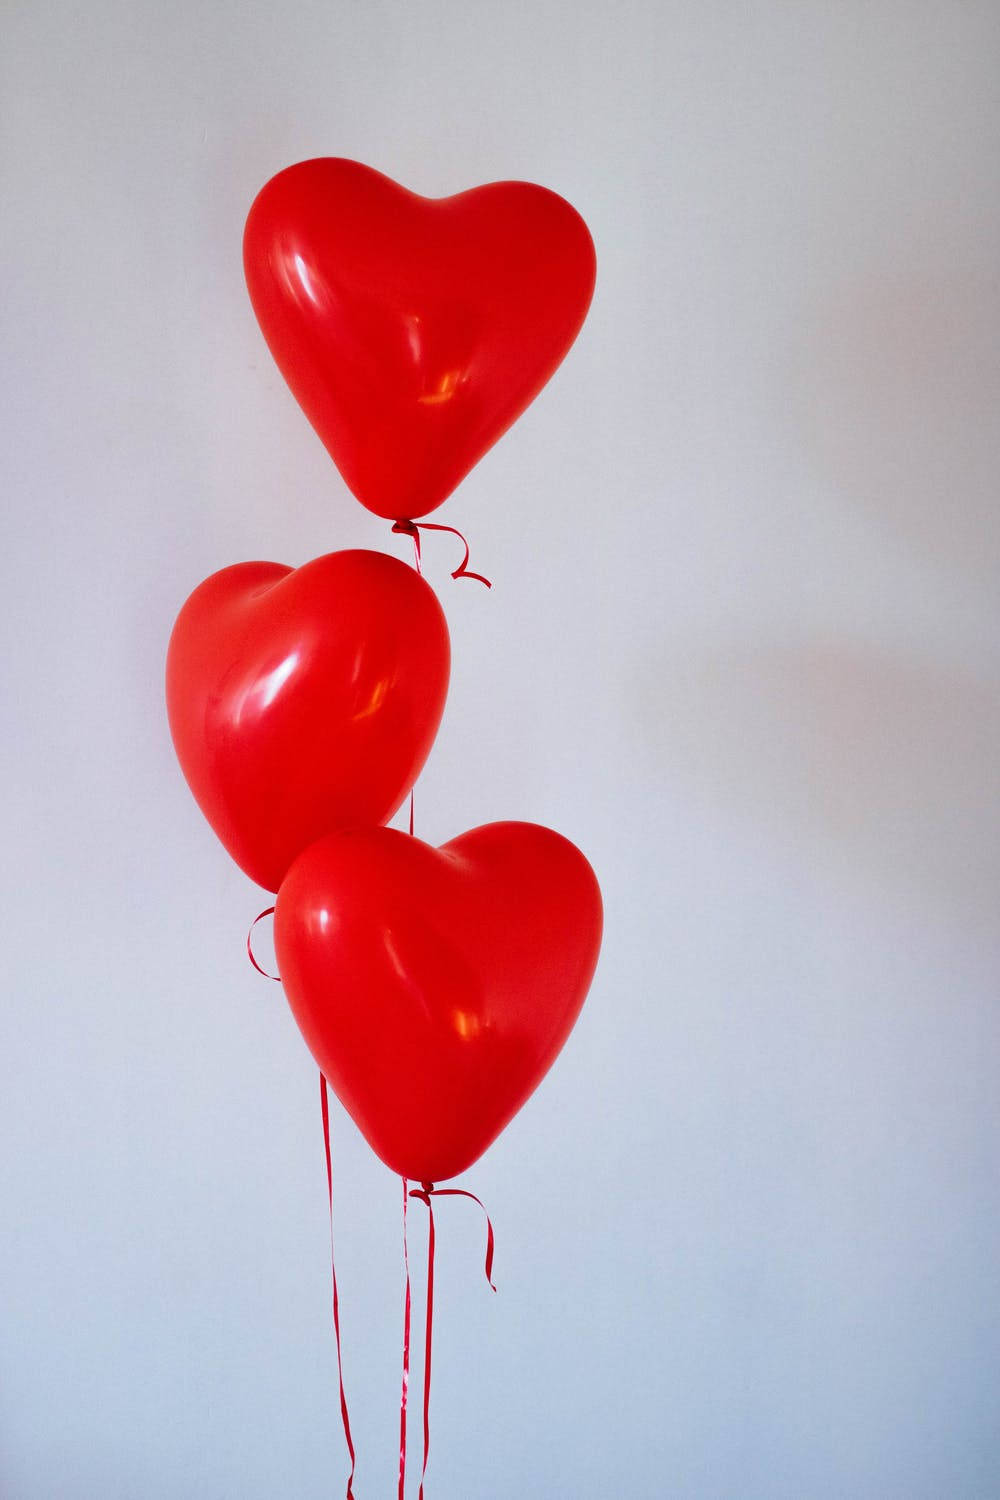 Heart Aesthetic Red Balloons